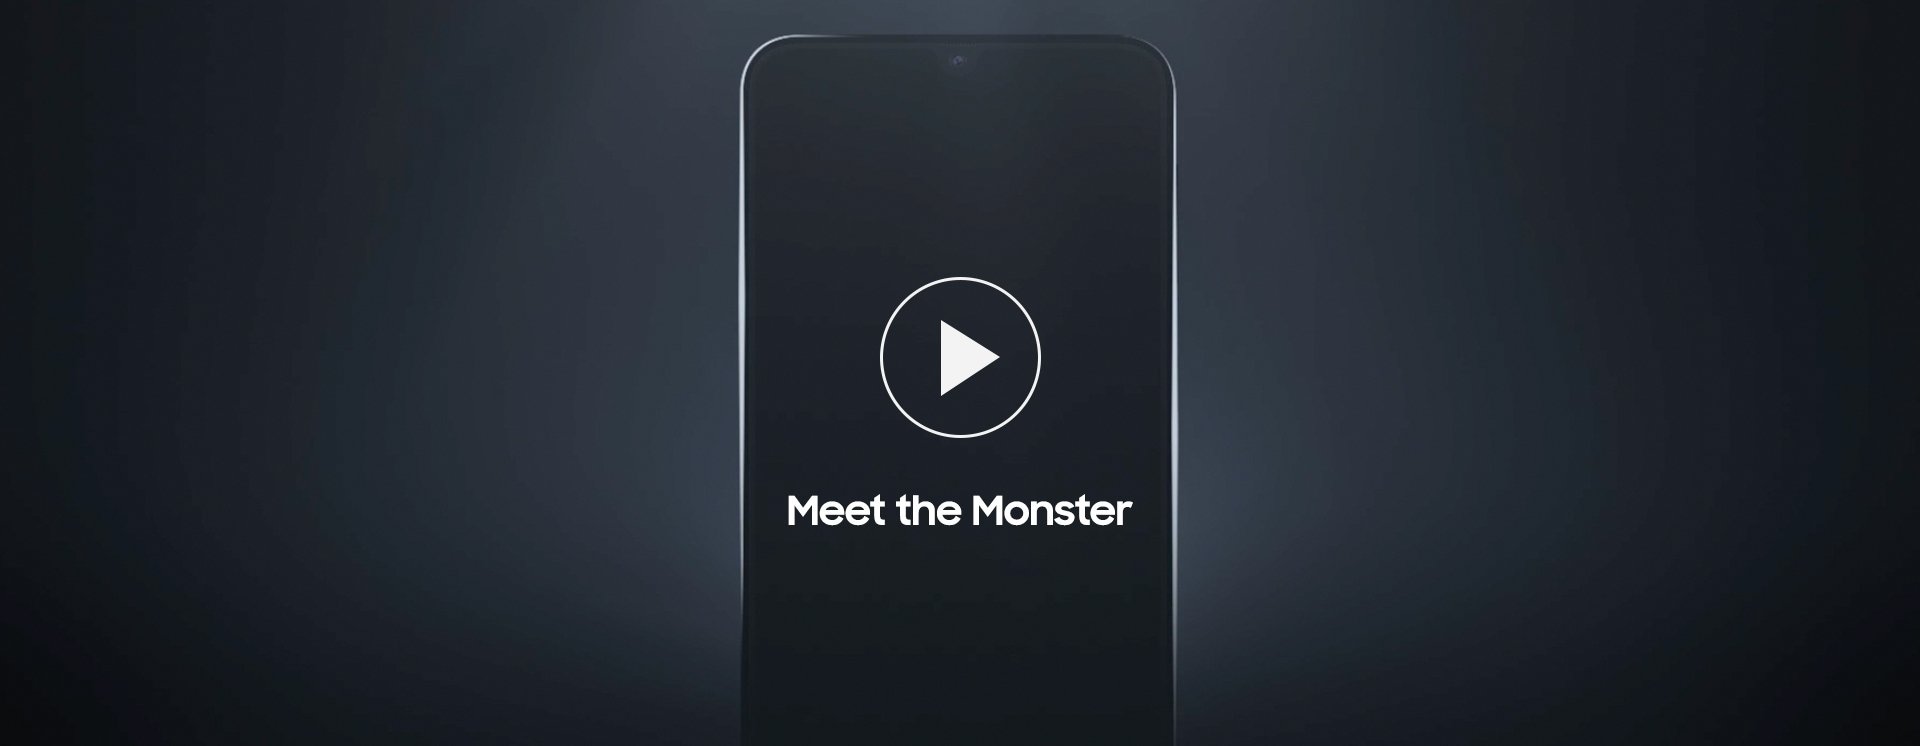 Samsung Galaxy M30s - Monster Phone